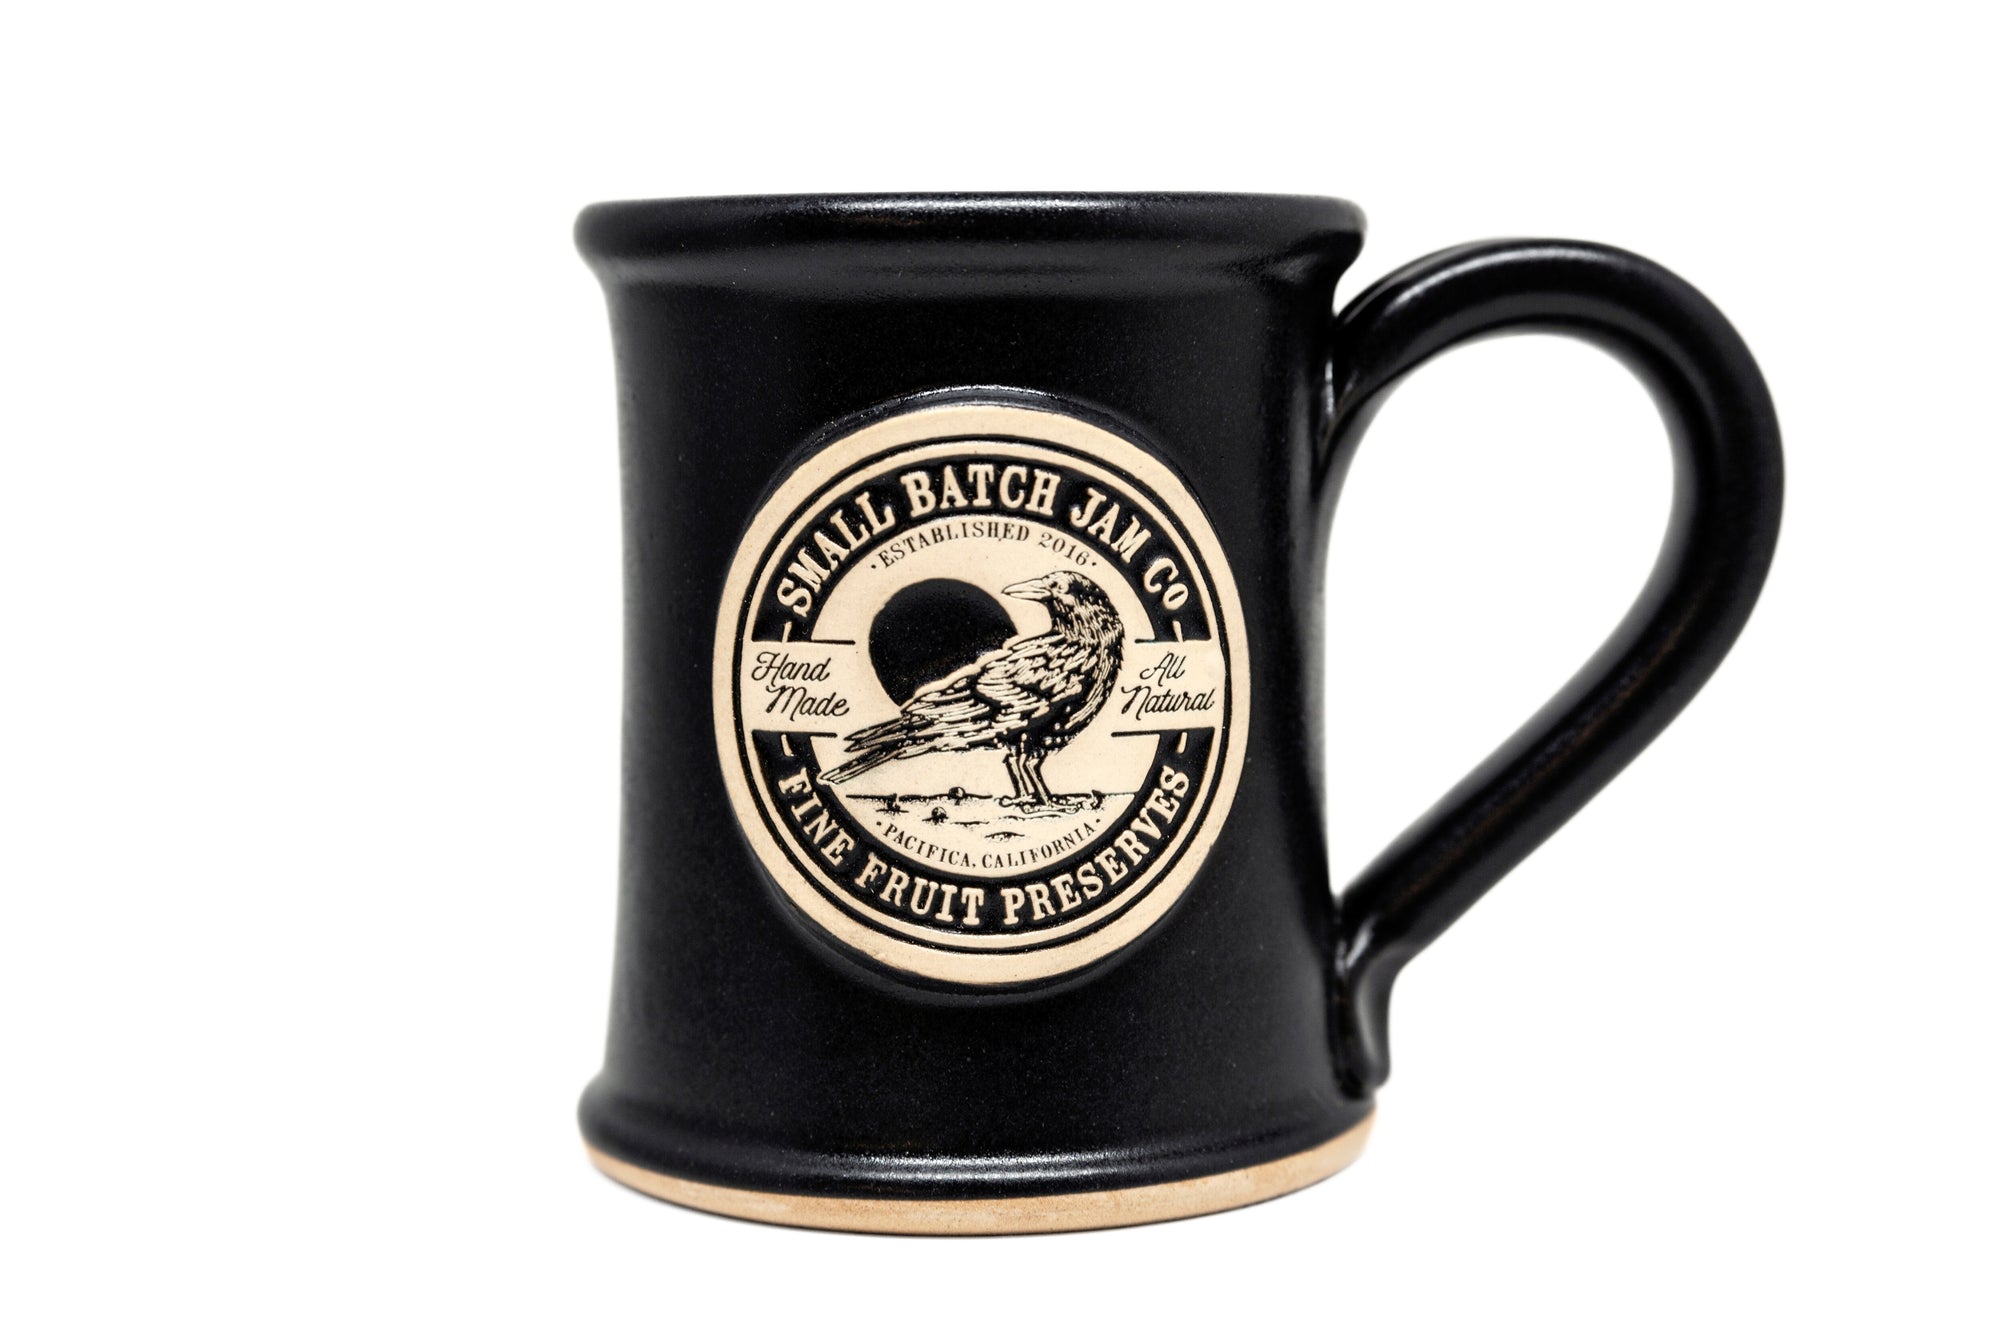 Handmade SBJC Slimline Coffee Mug - Black 14 oz.